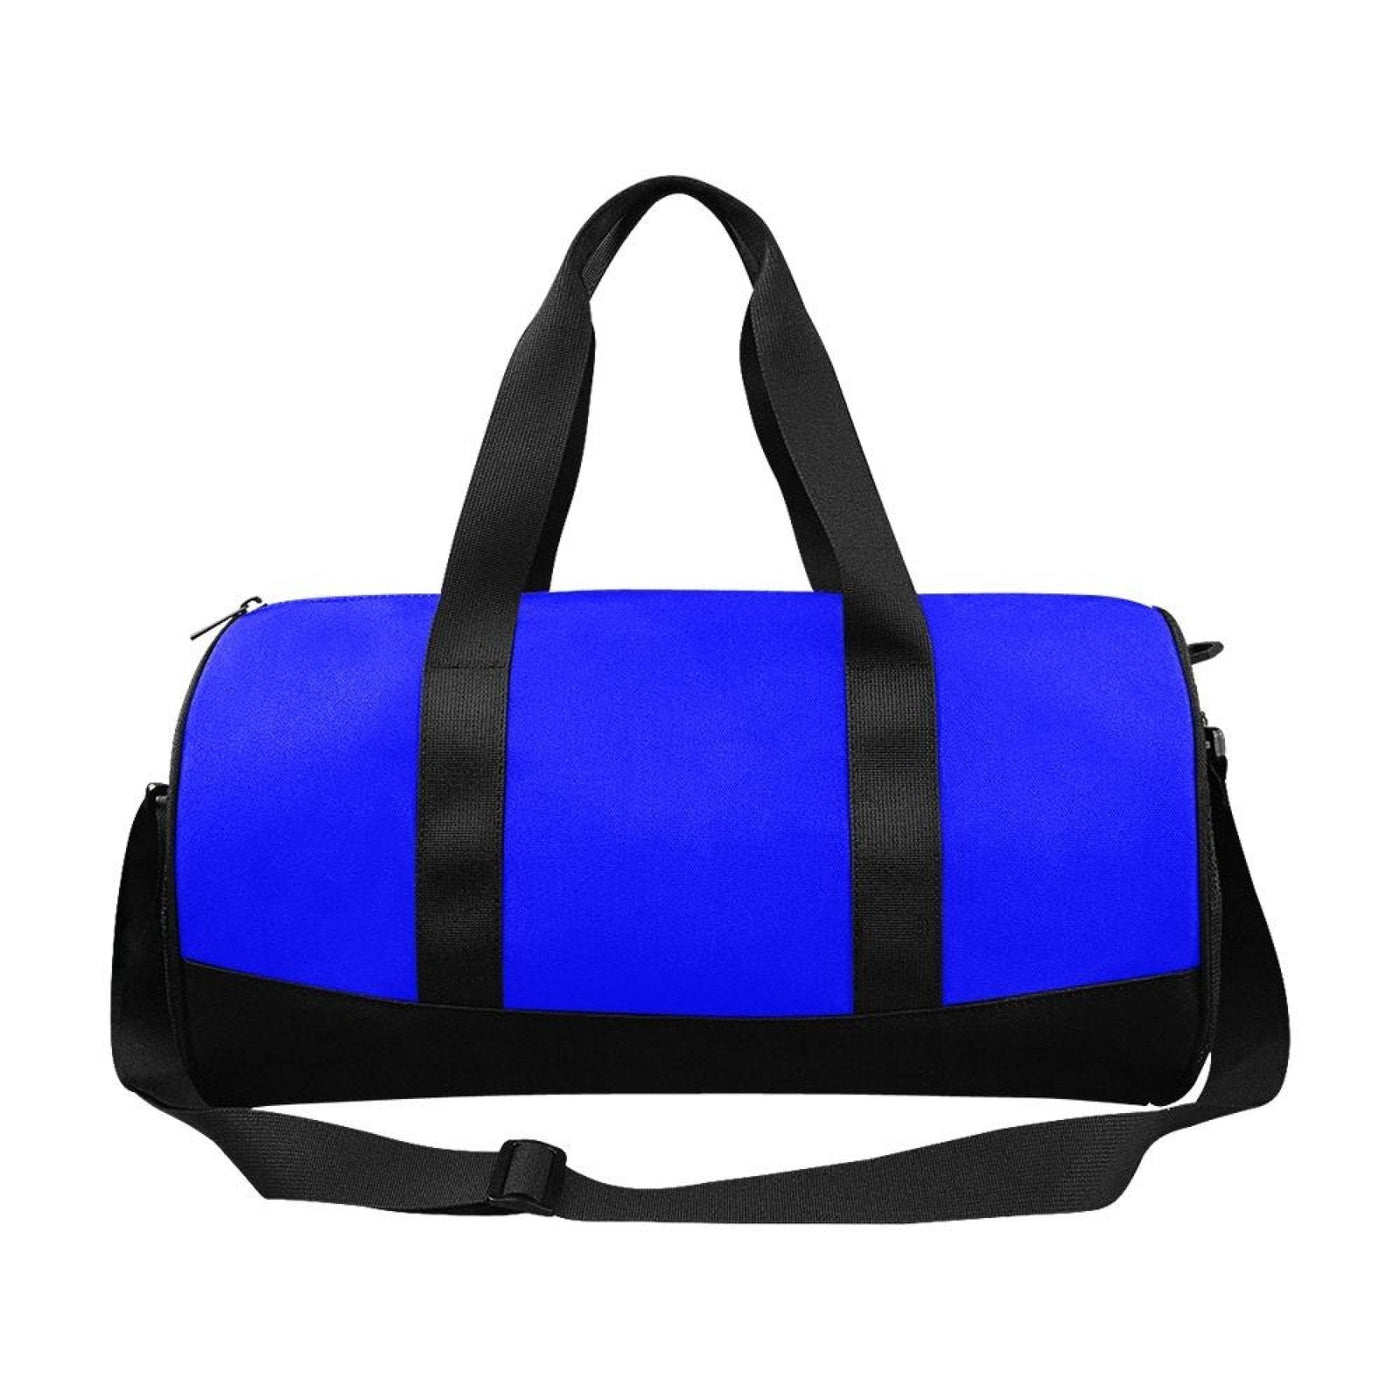 Duffel Bag Carry On Luggage Royal Blue - Bags | Duffel Bags